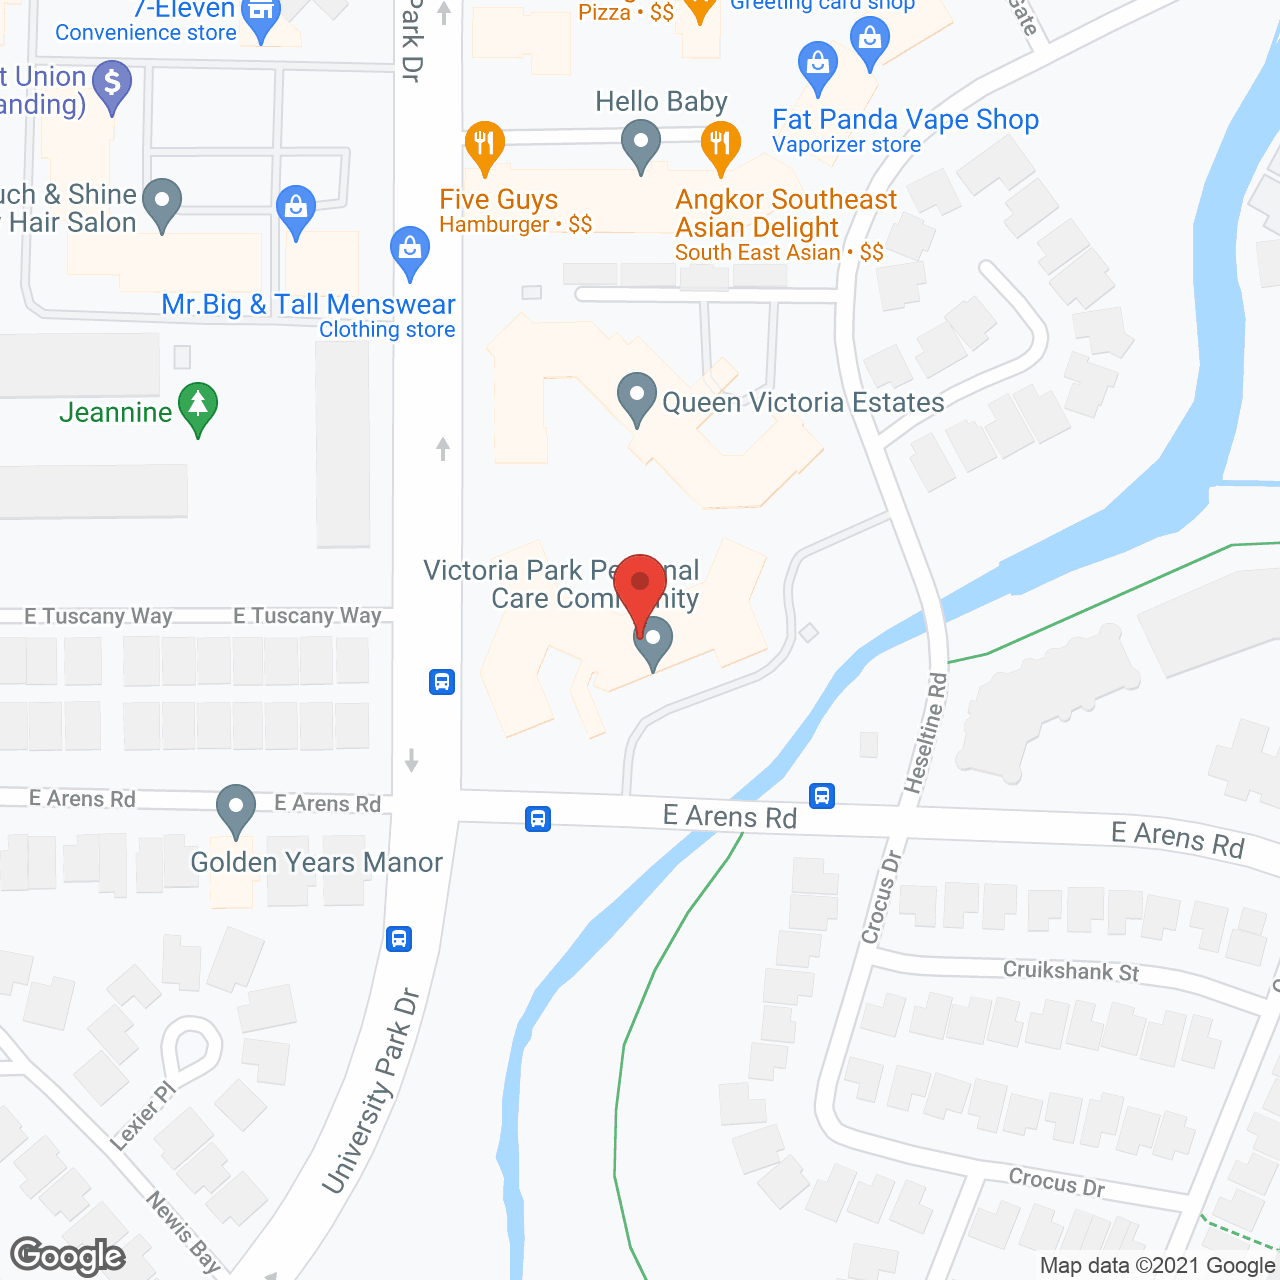 Victoria Park Personal Care Community in google map